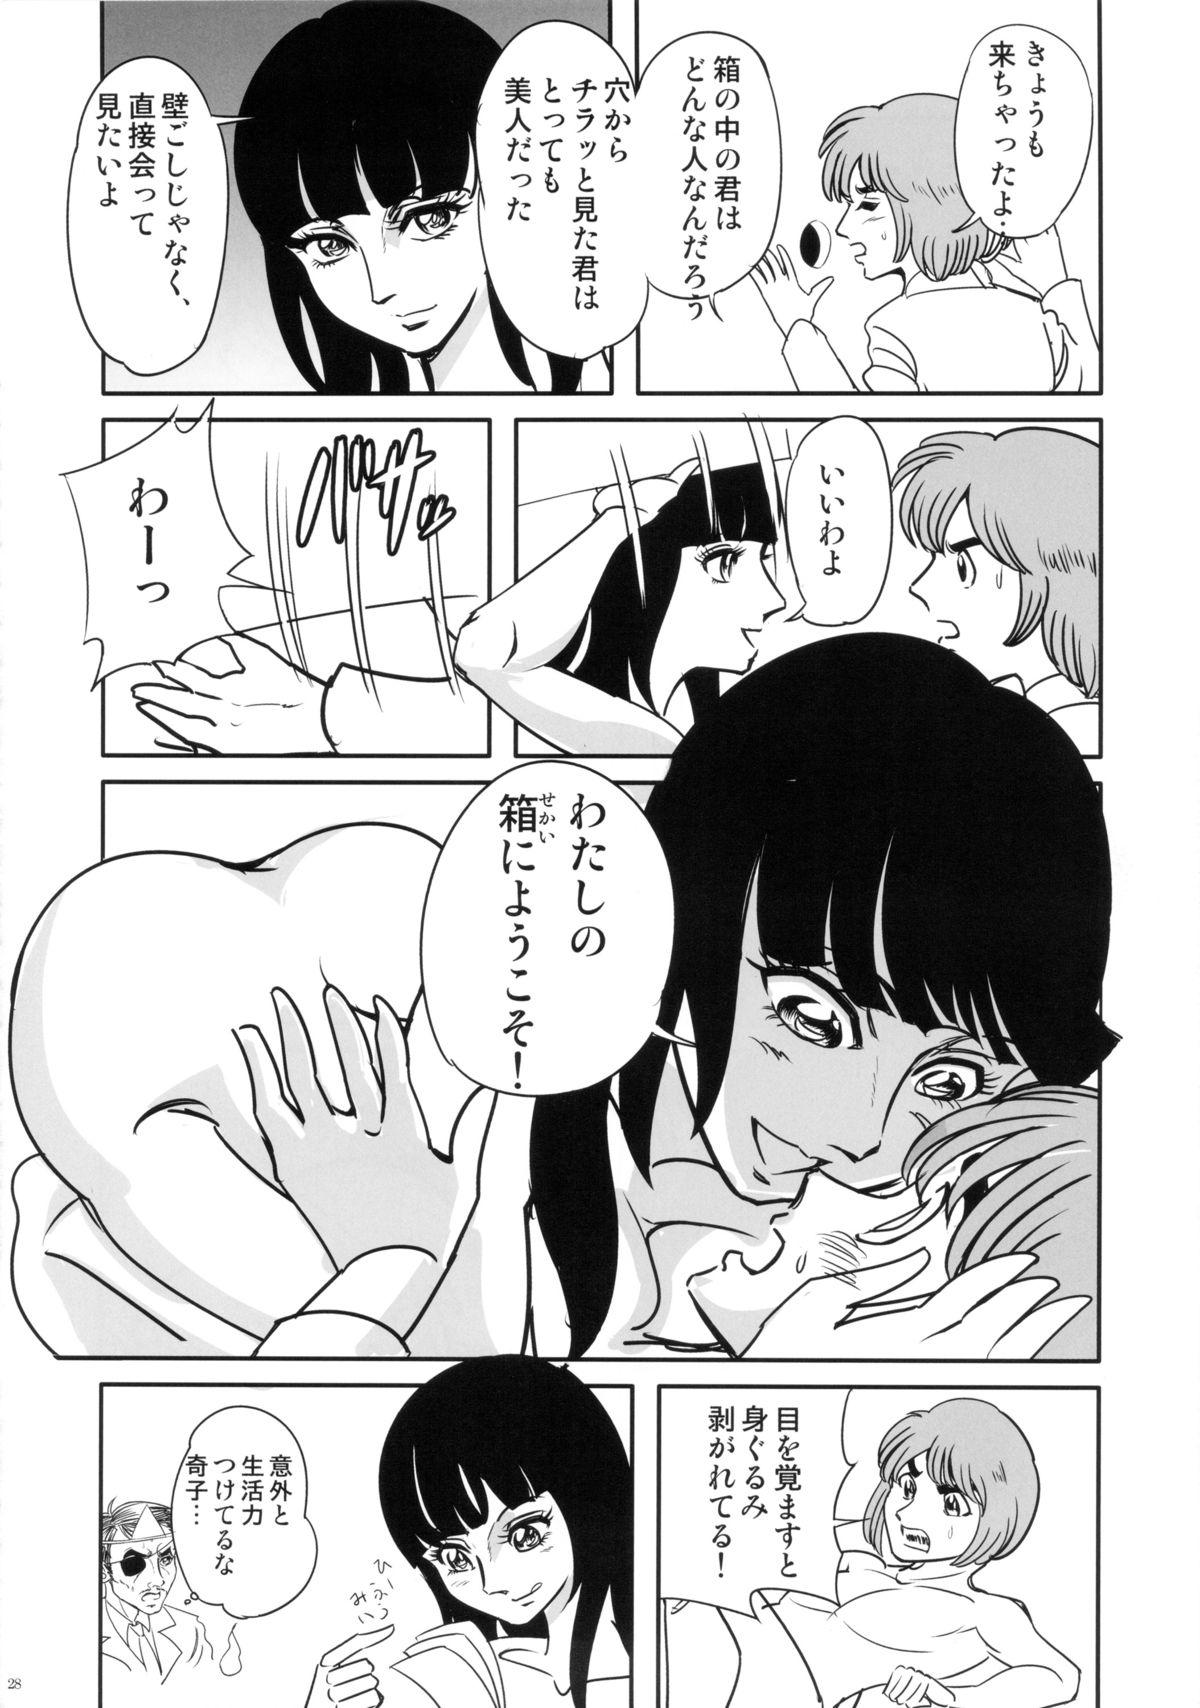 FLOUR2 Tezuka Manga Graffiti 27